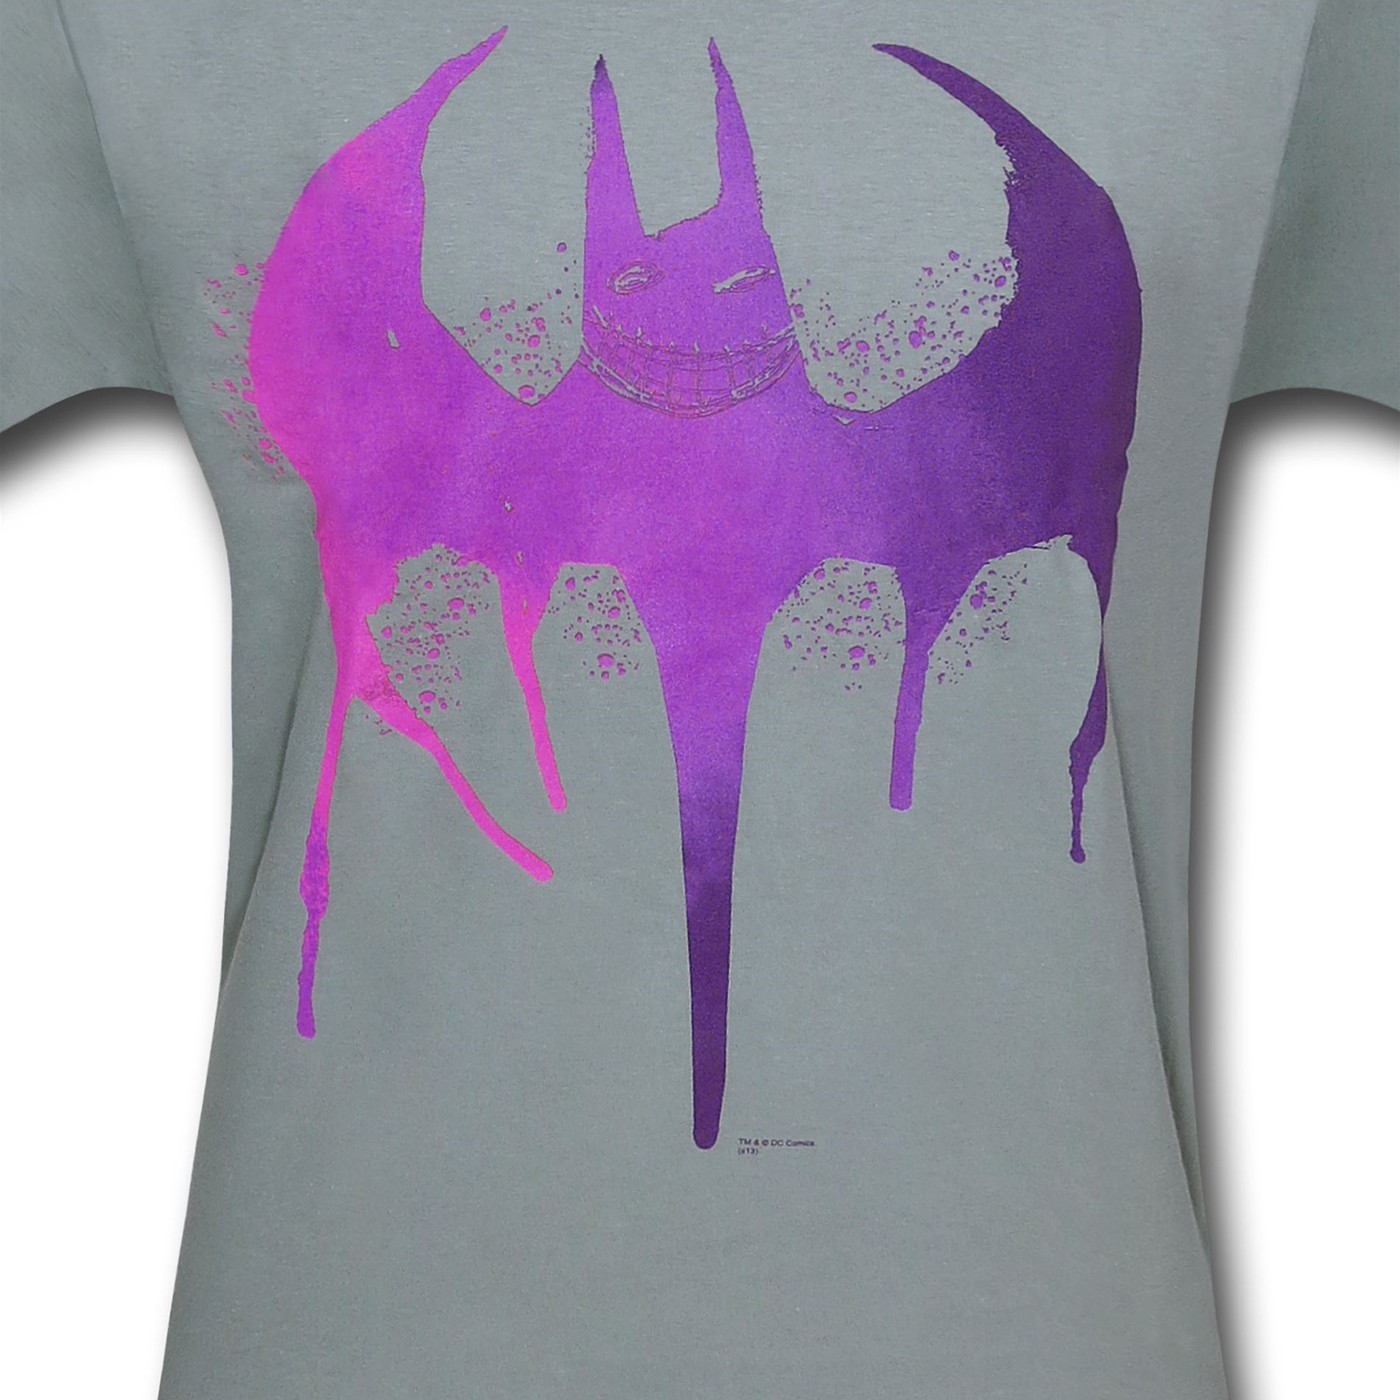 Batman Joker Bat Symbol T-Shirt